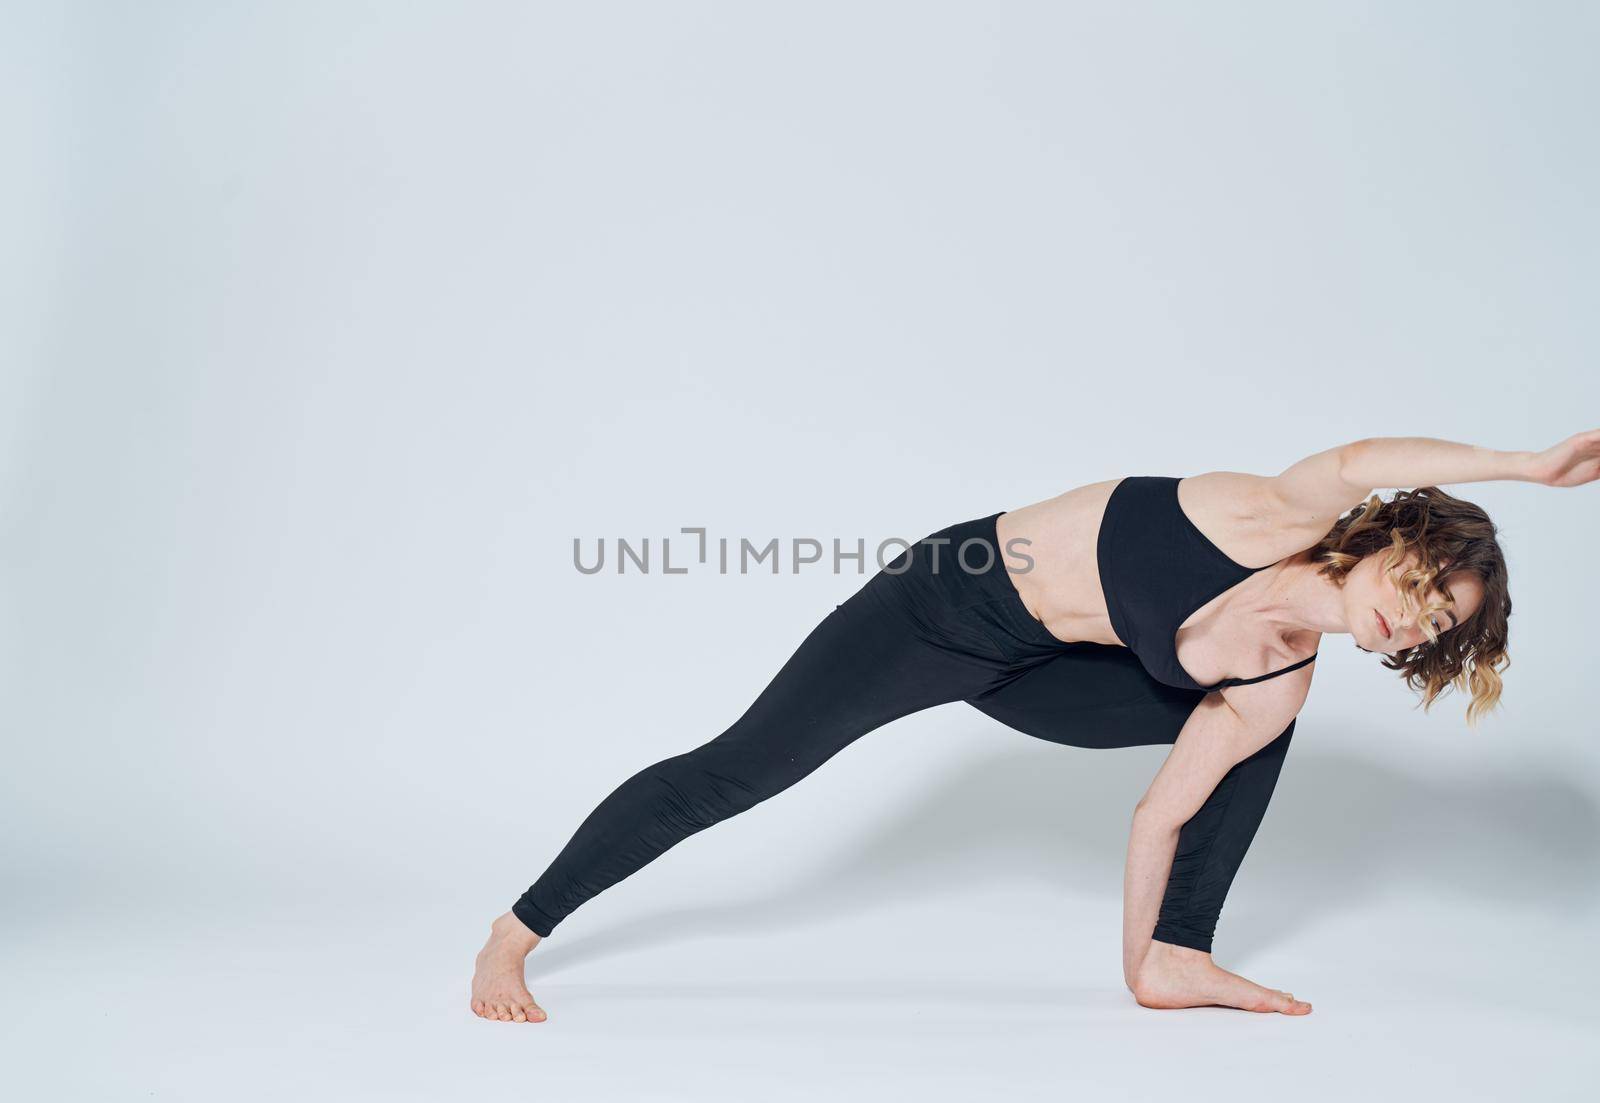 Exercises slim woman yoga asana light background meditation model by SHOTPRIME